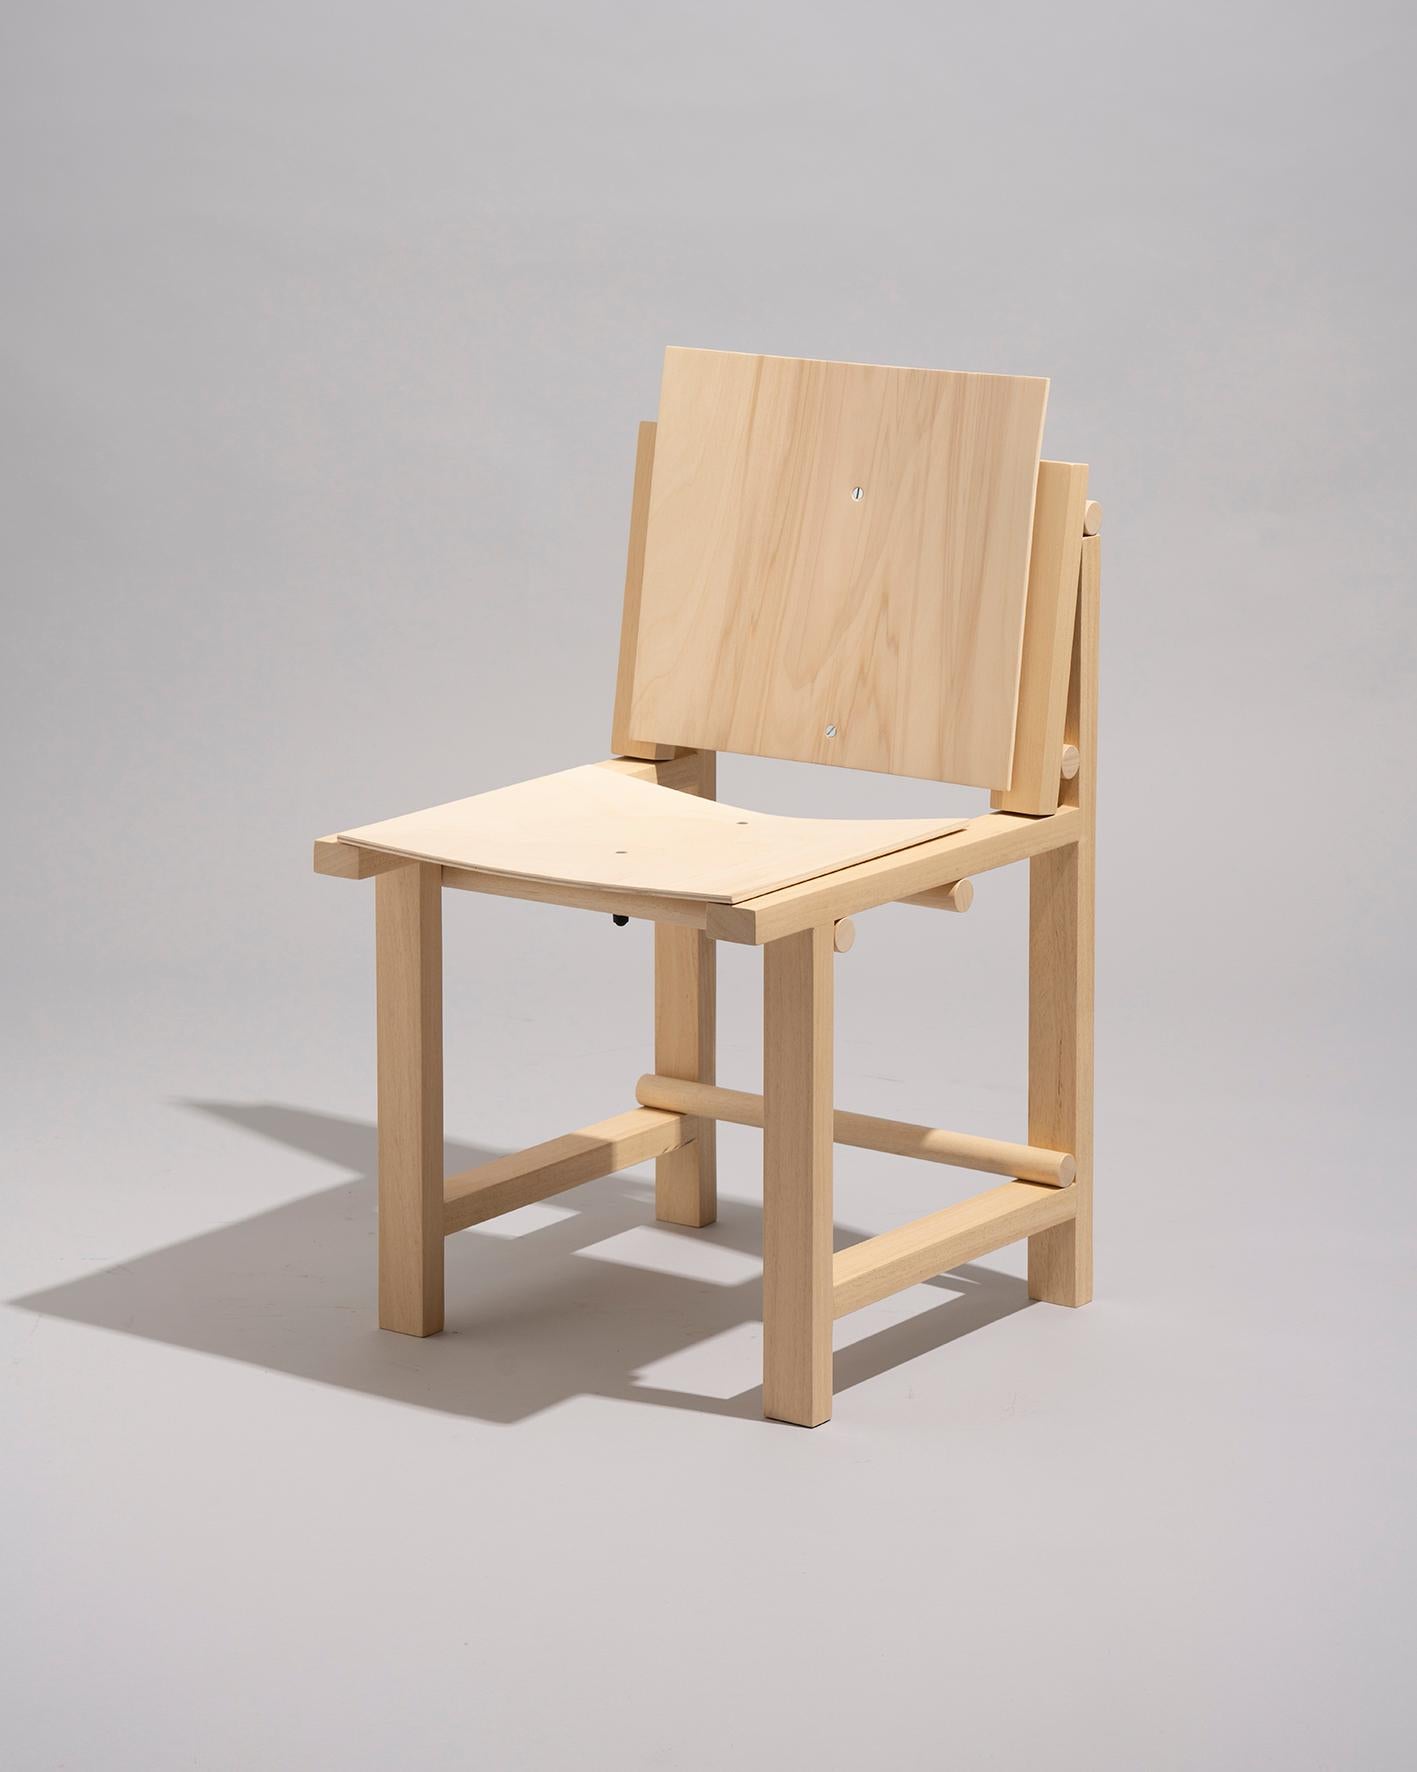 diy plywood chair